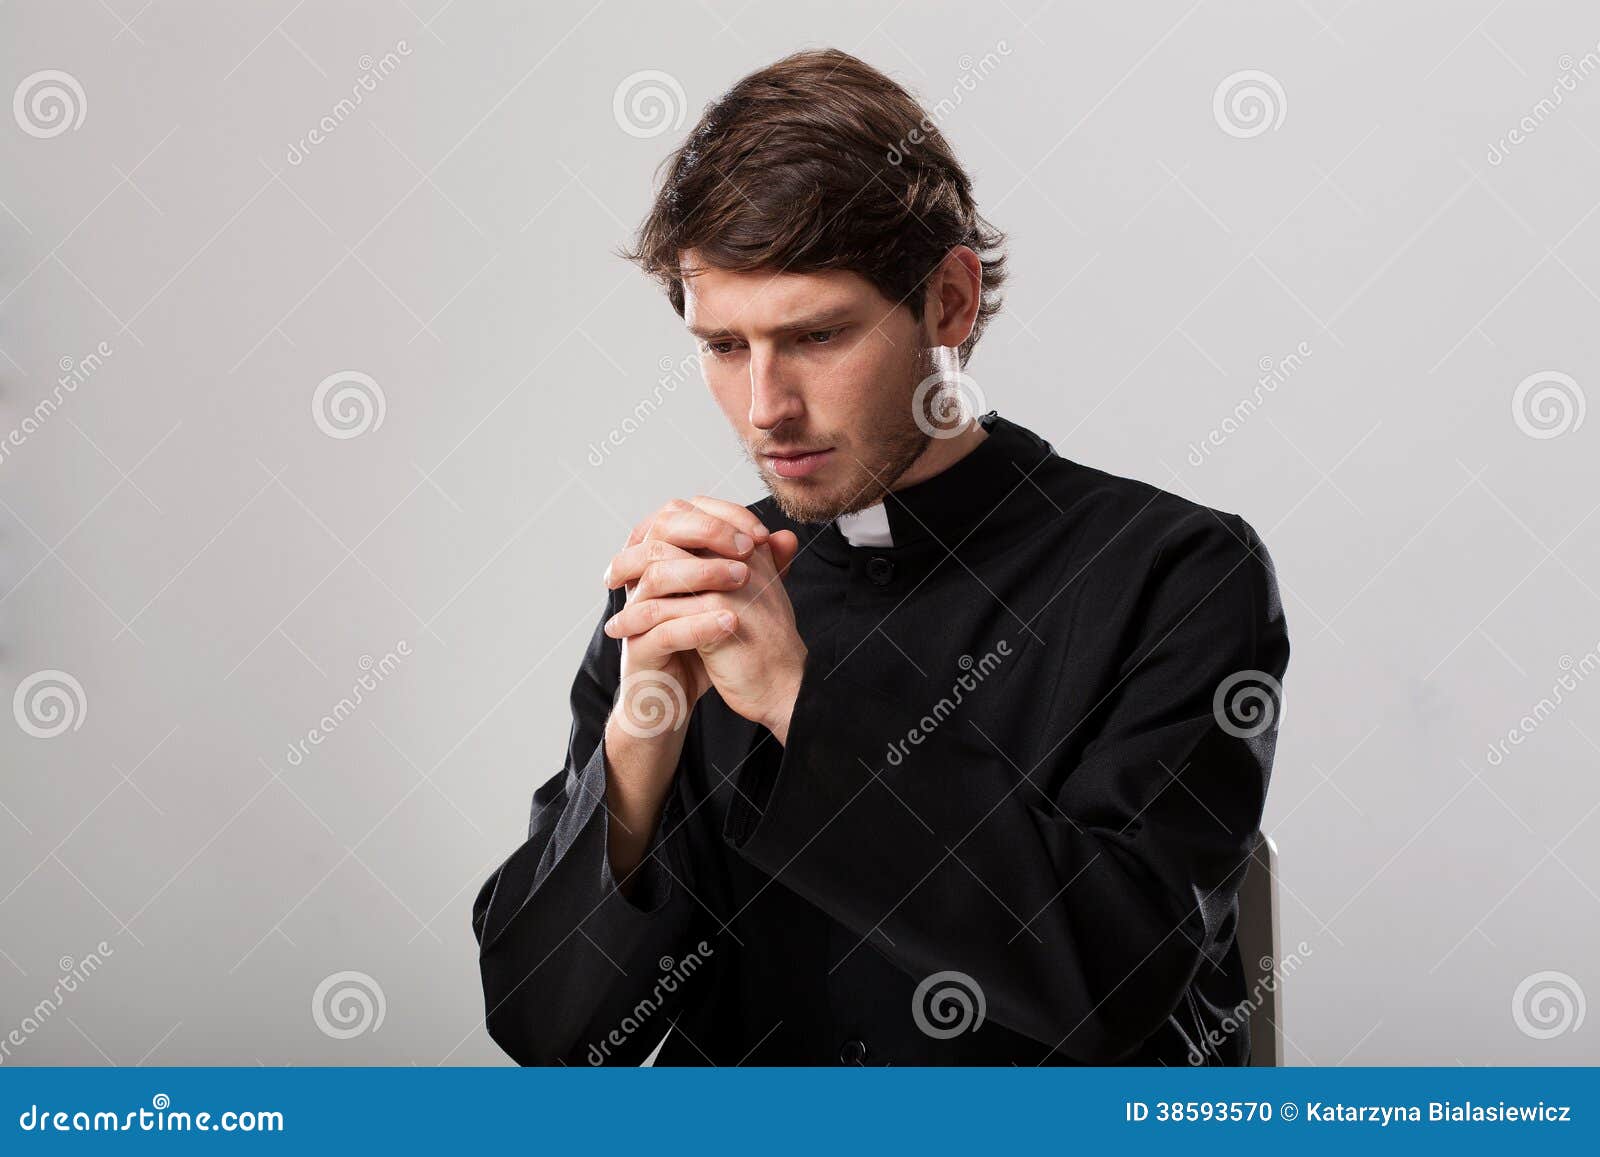 priest is praying